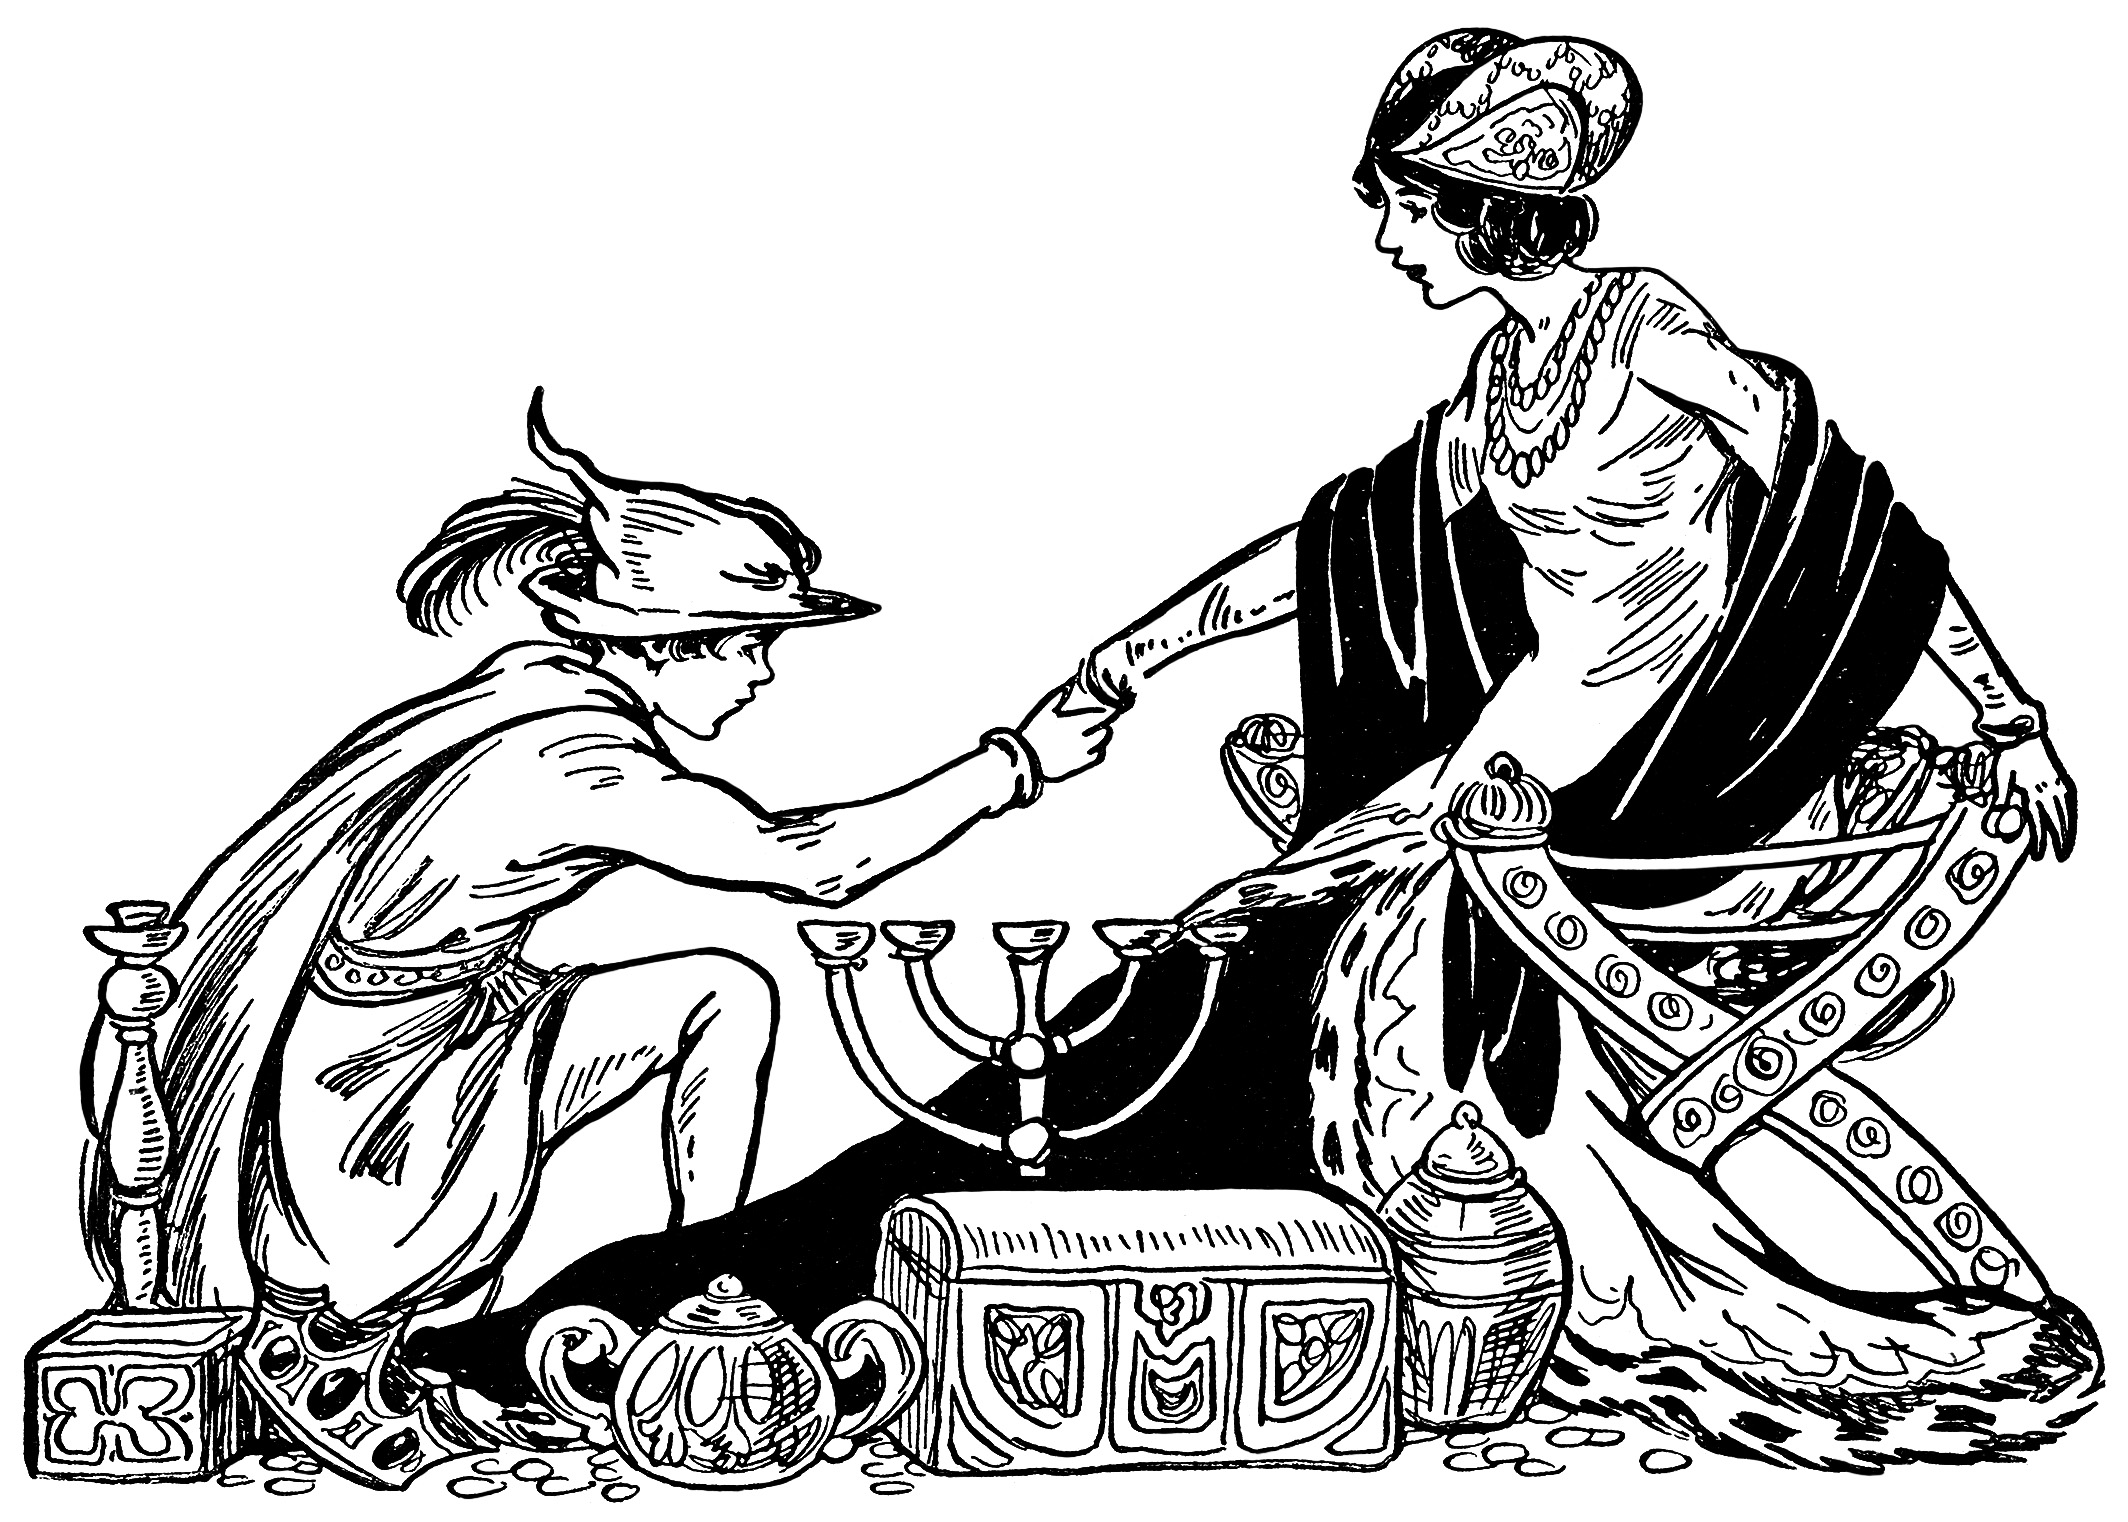 prince princess illustration, black and white graphics, vintage storybook illustration, vintage fairytale clip art